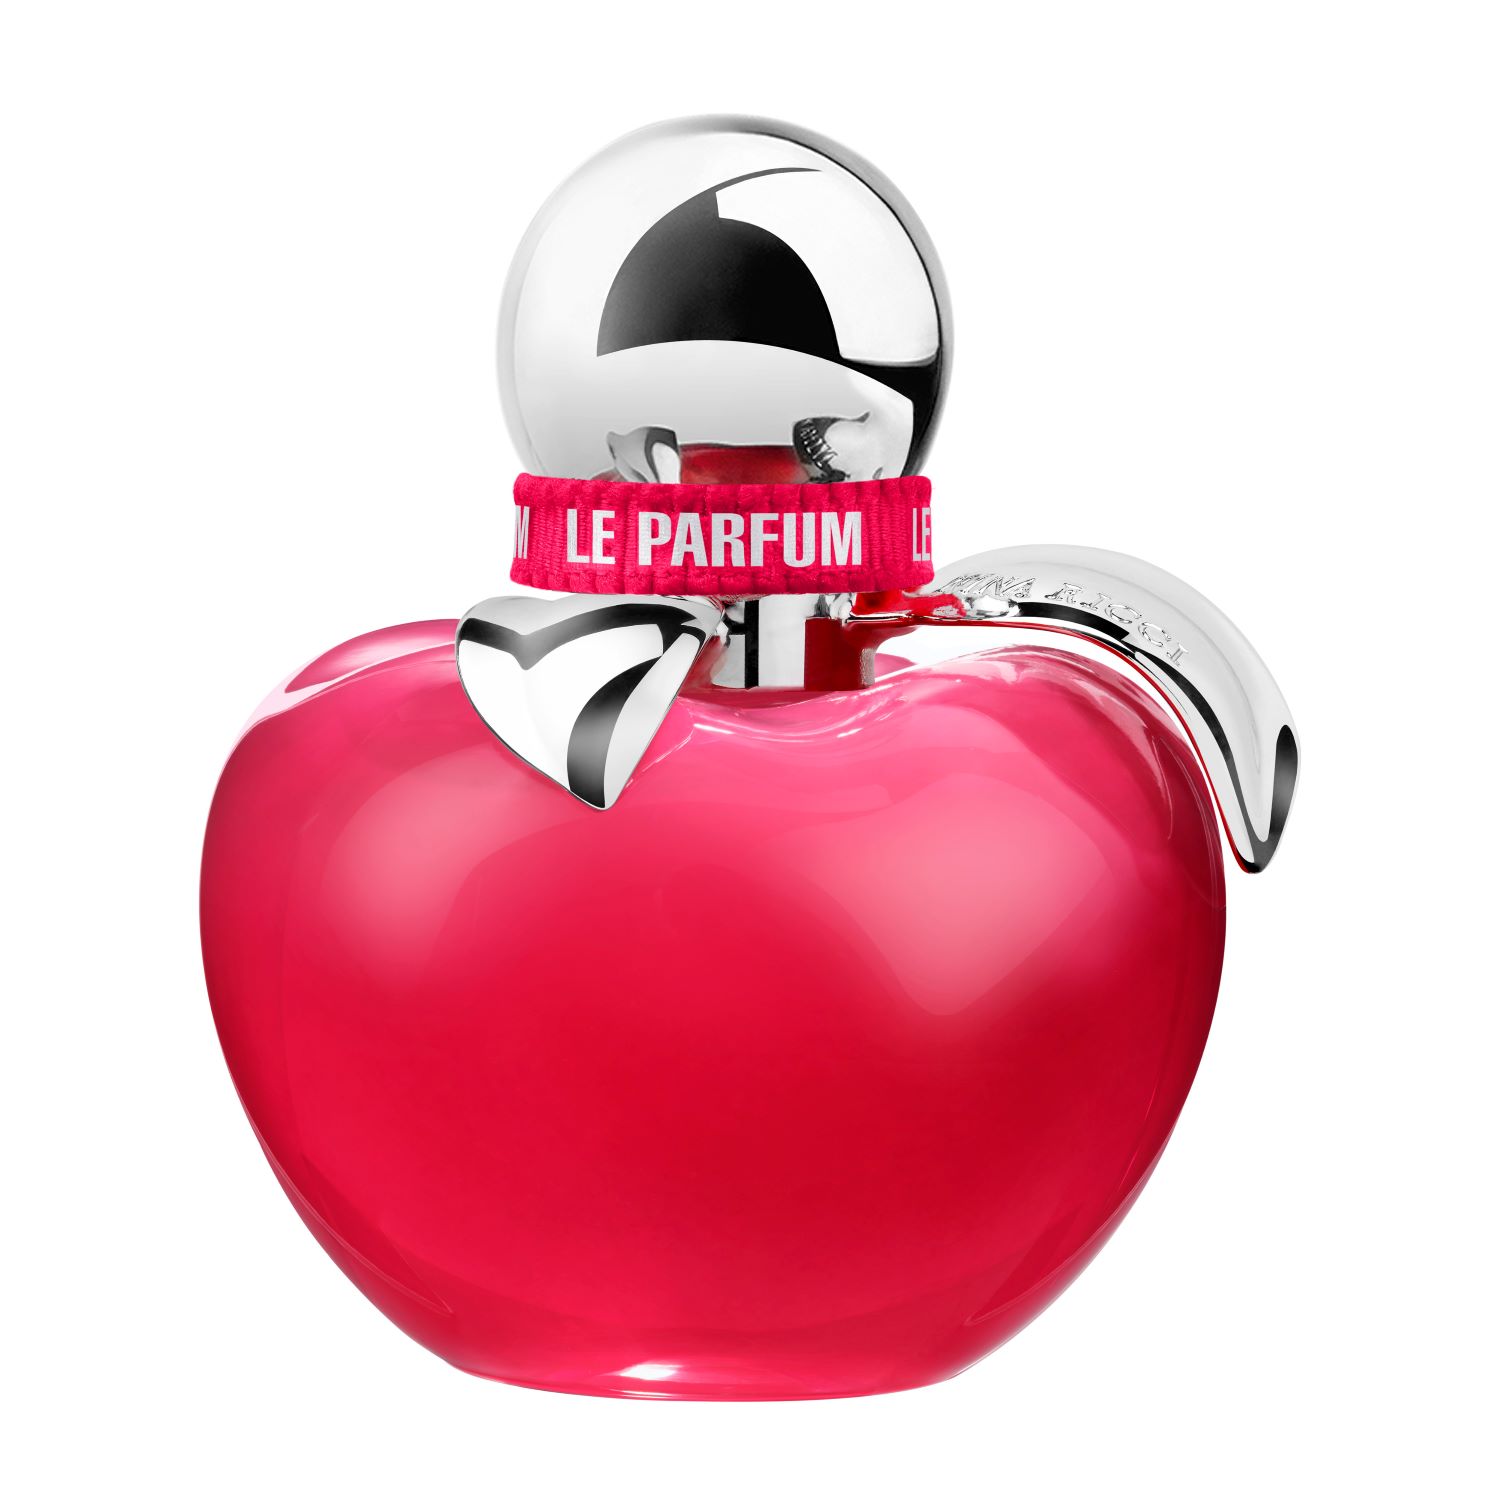 Acf Gel De Ducha Cherry Blossom - Perfumerías Pigmento